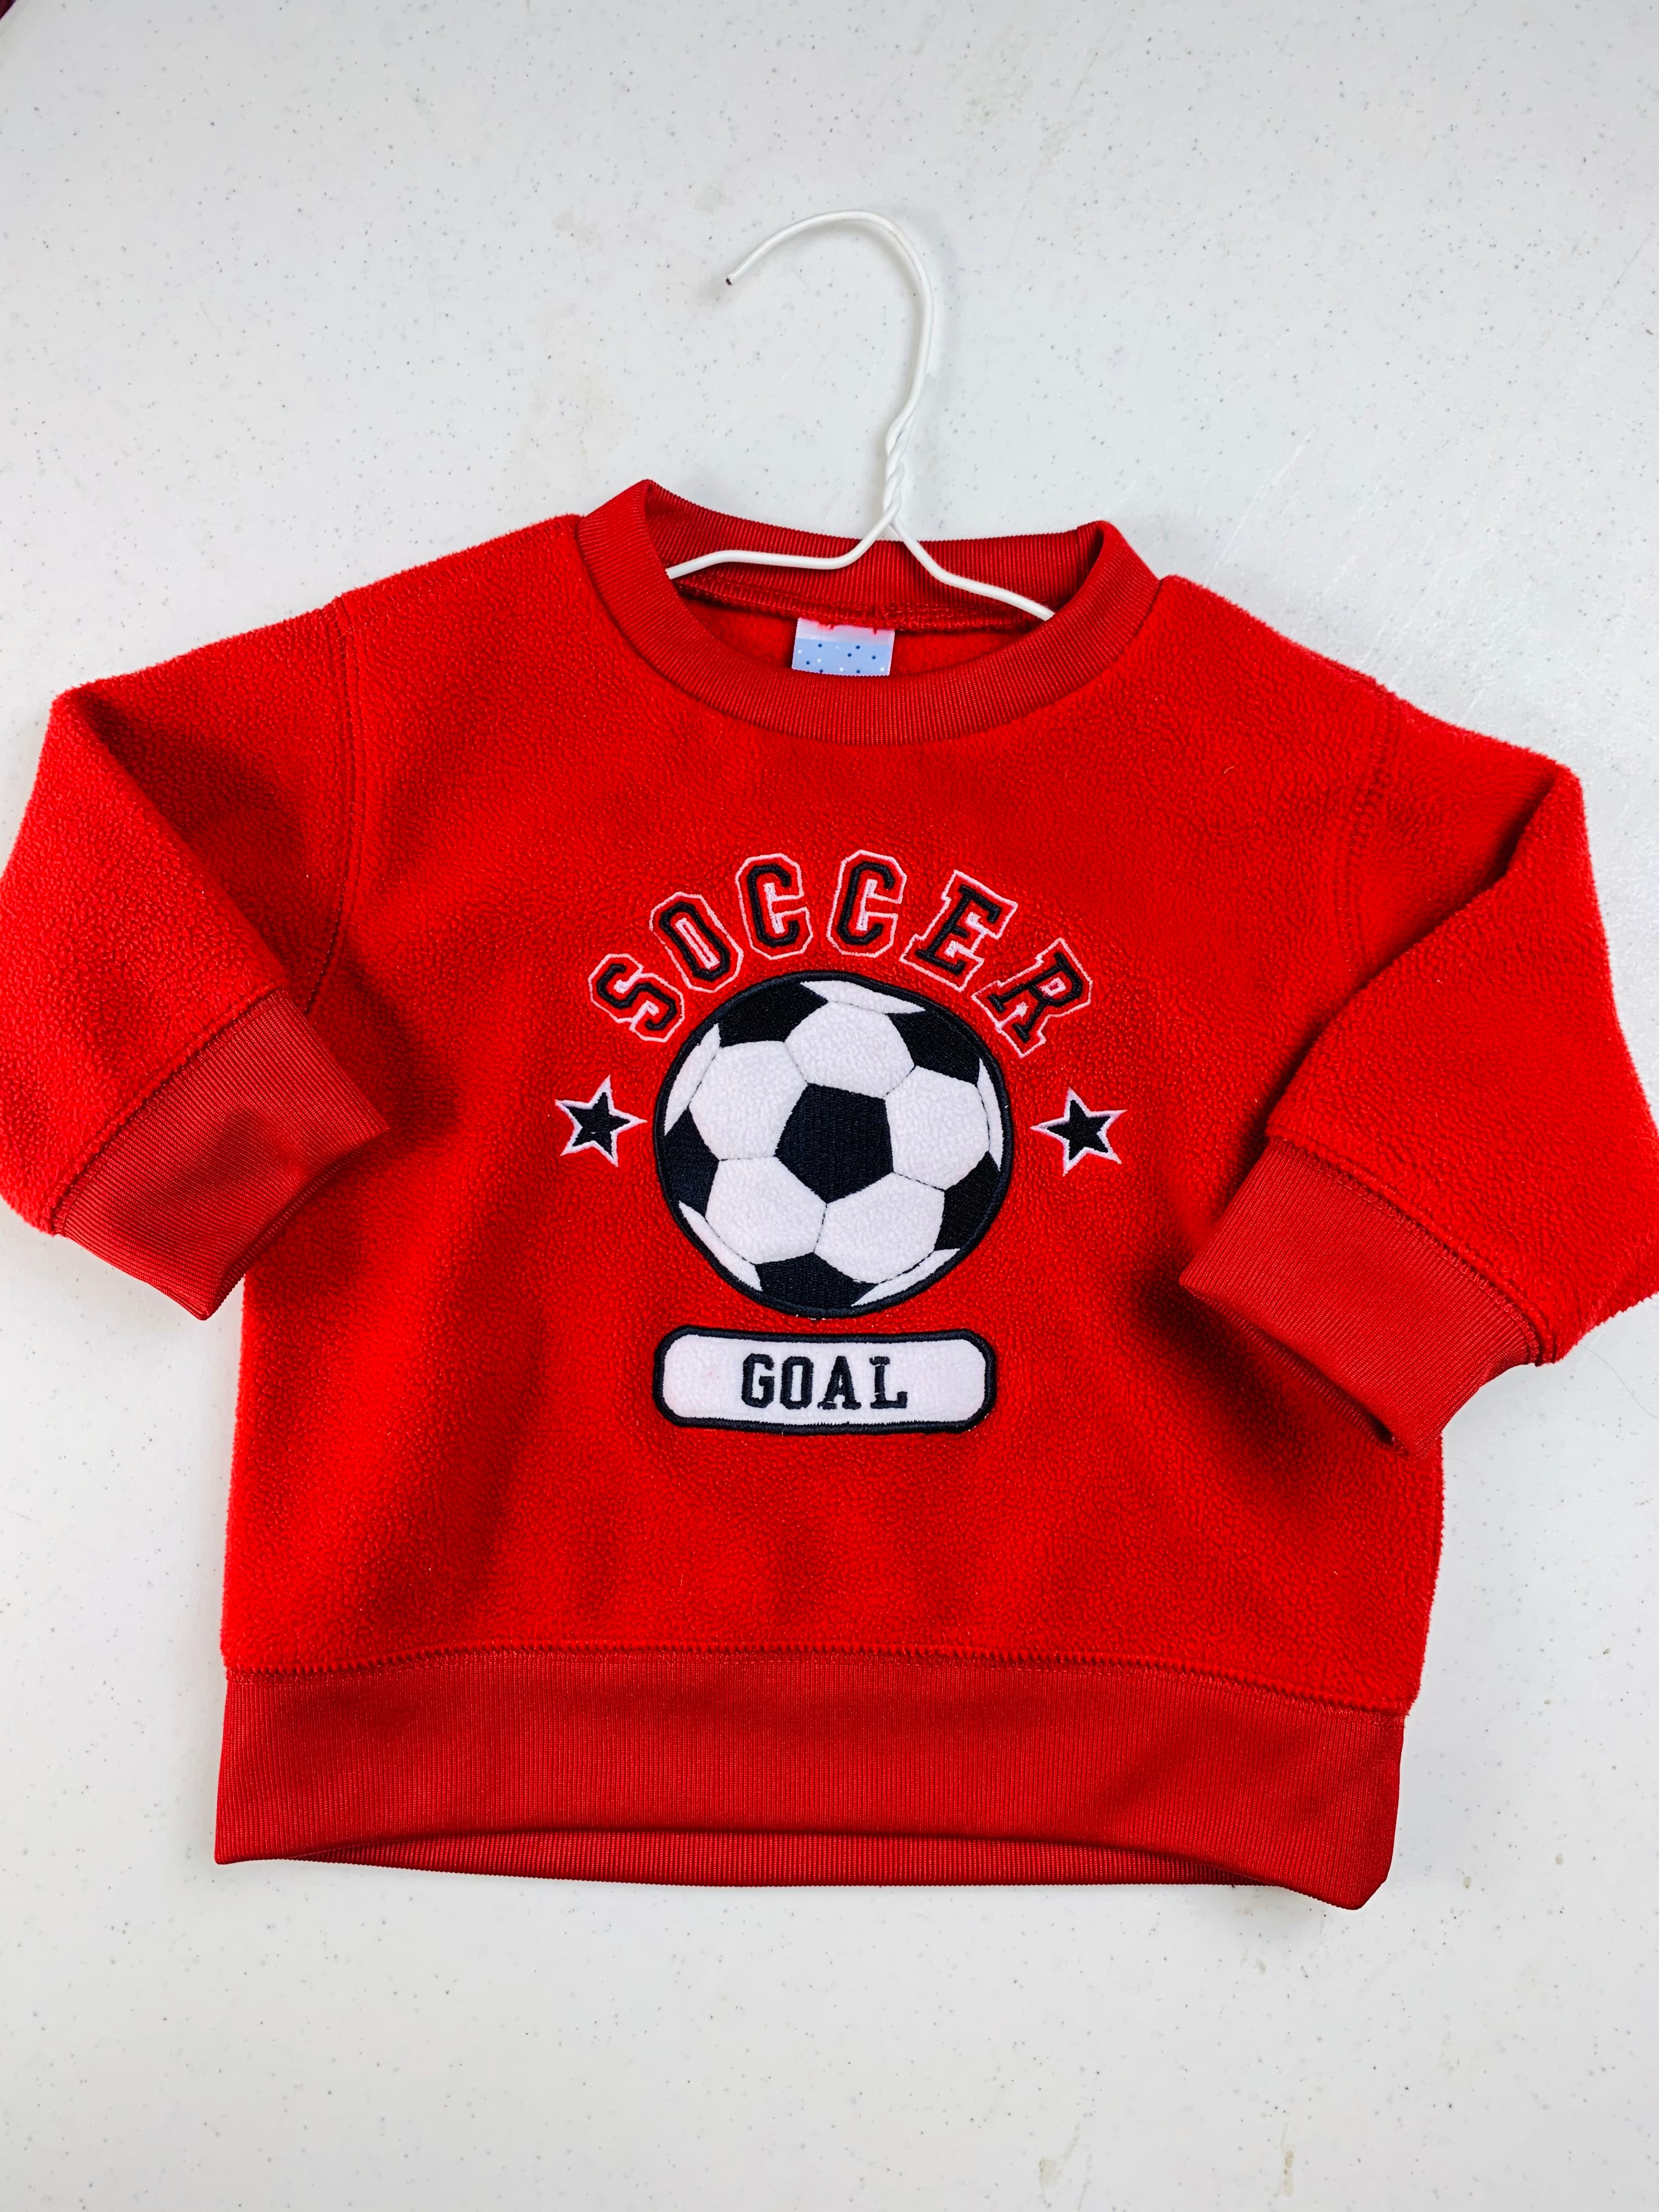 Resale soccer goal sweatshirt 6/9 m 🧵